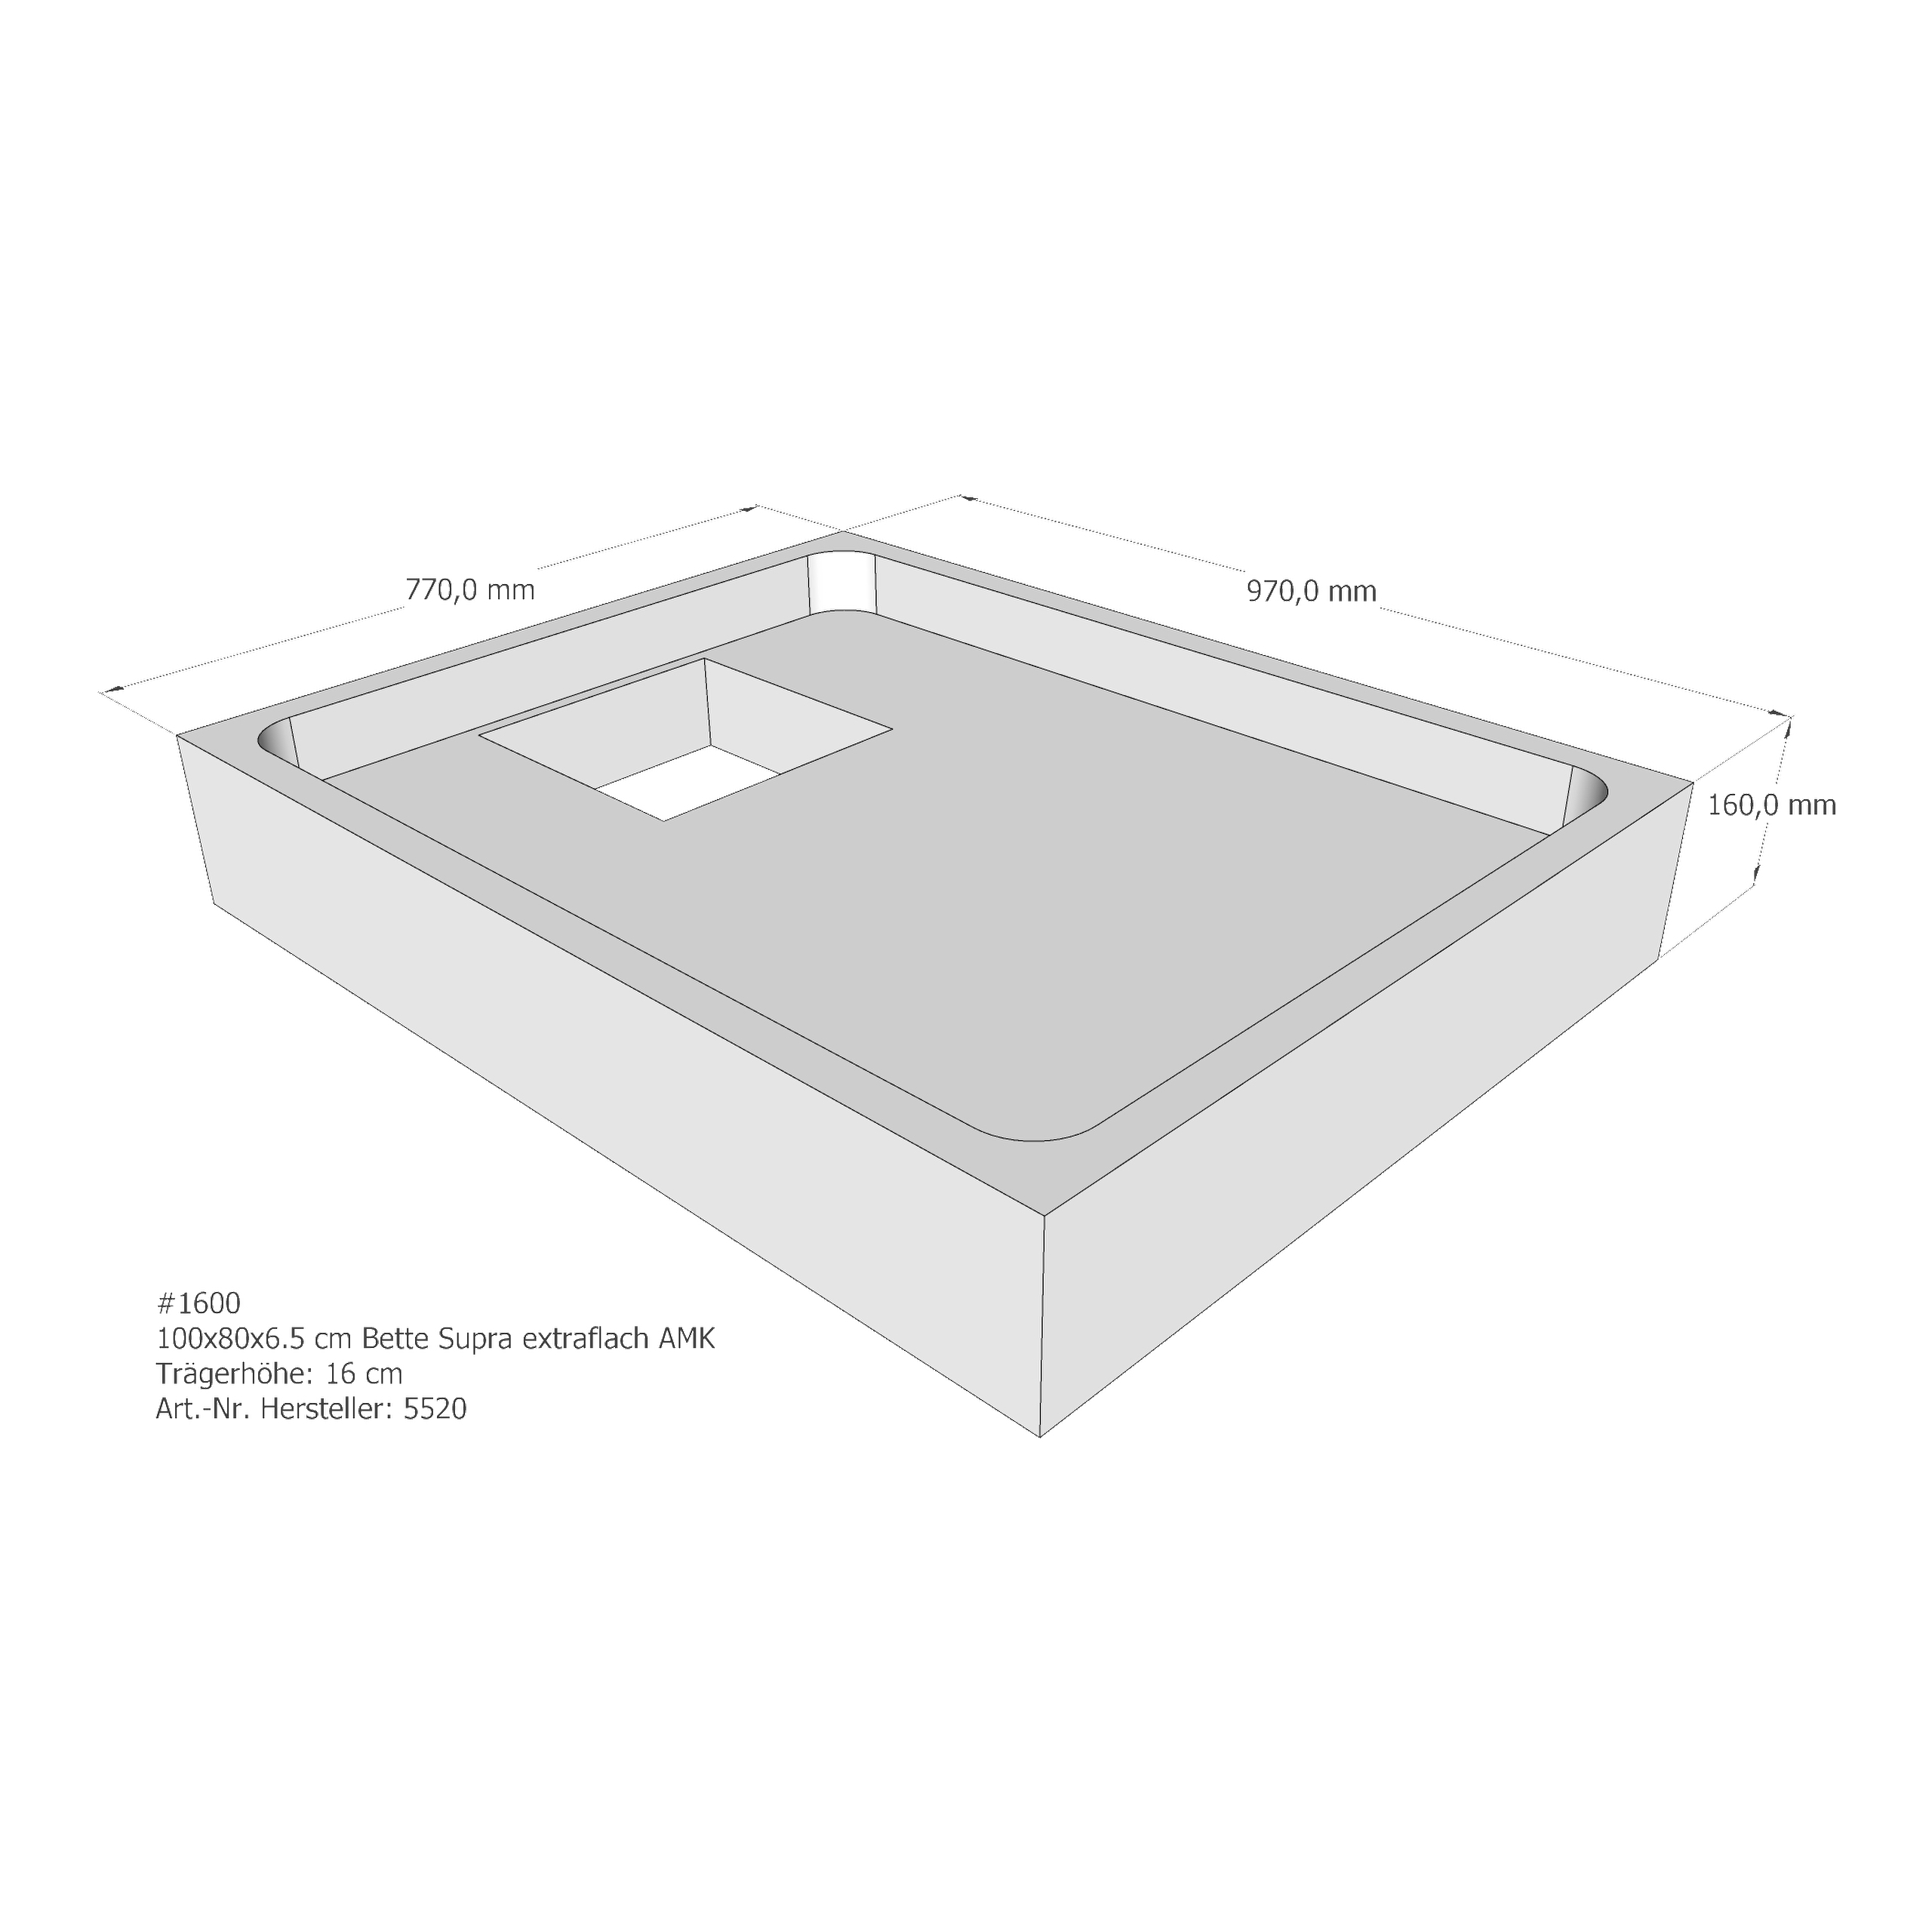 Duschwannenträger Bette BetteSupra (extraflach) 100x80x6,5 cm AMK210